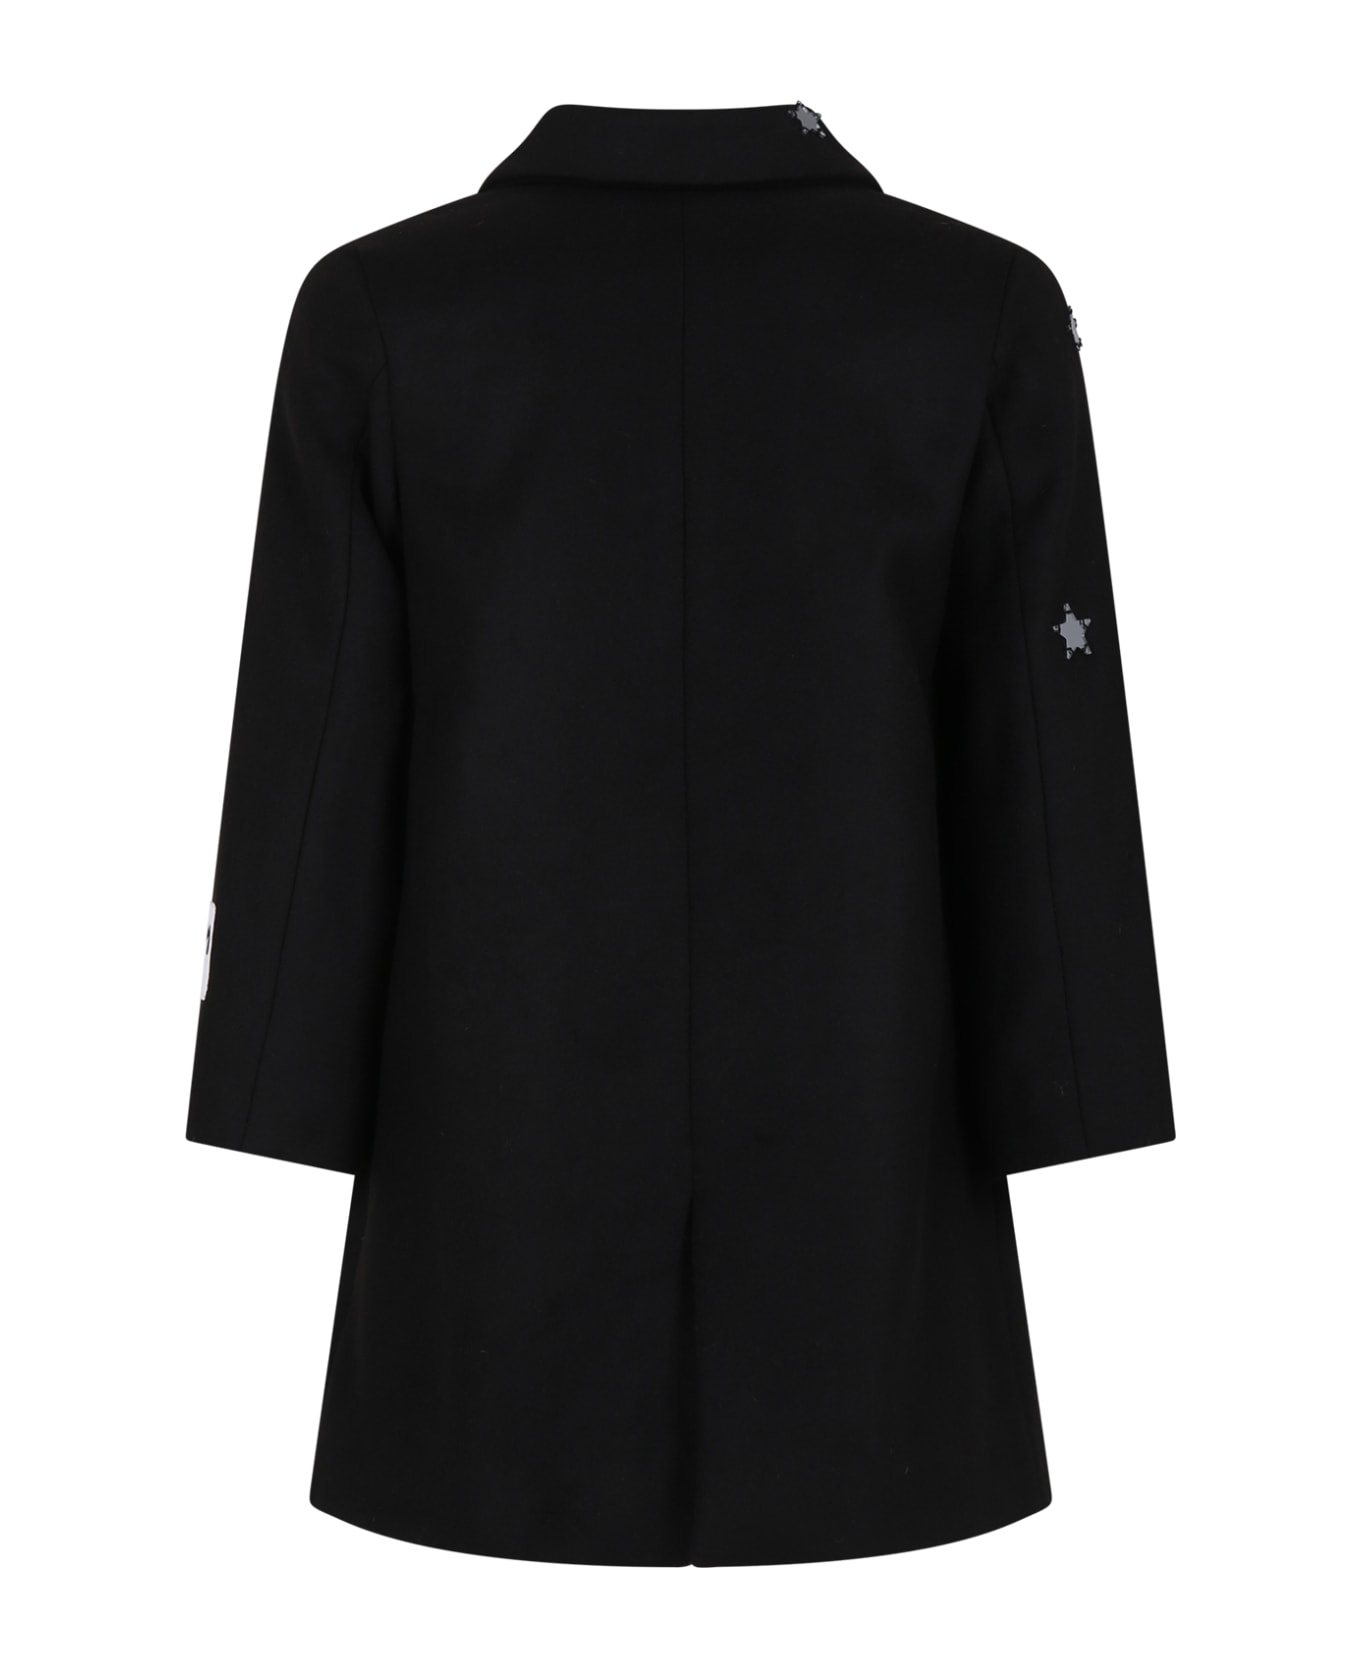 MSGM Black Coat For Girl With Stars - Black